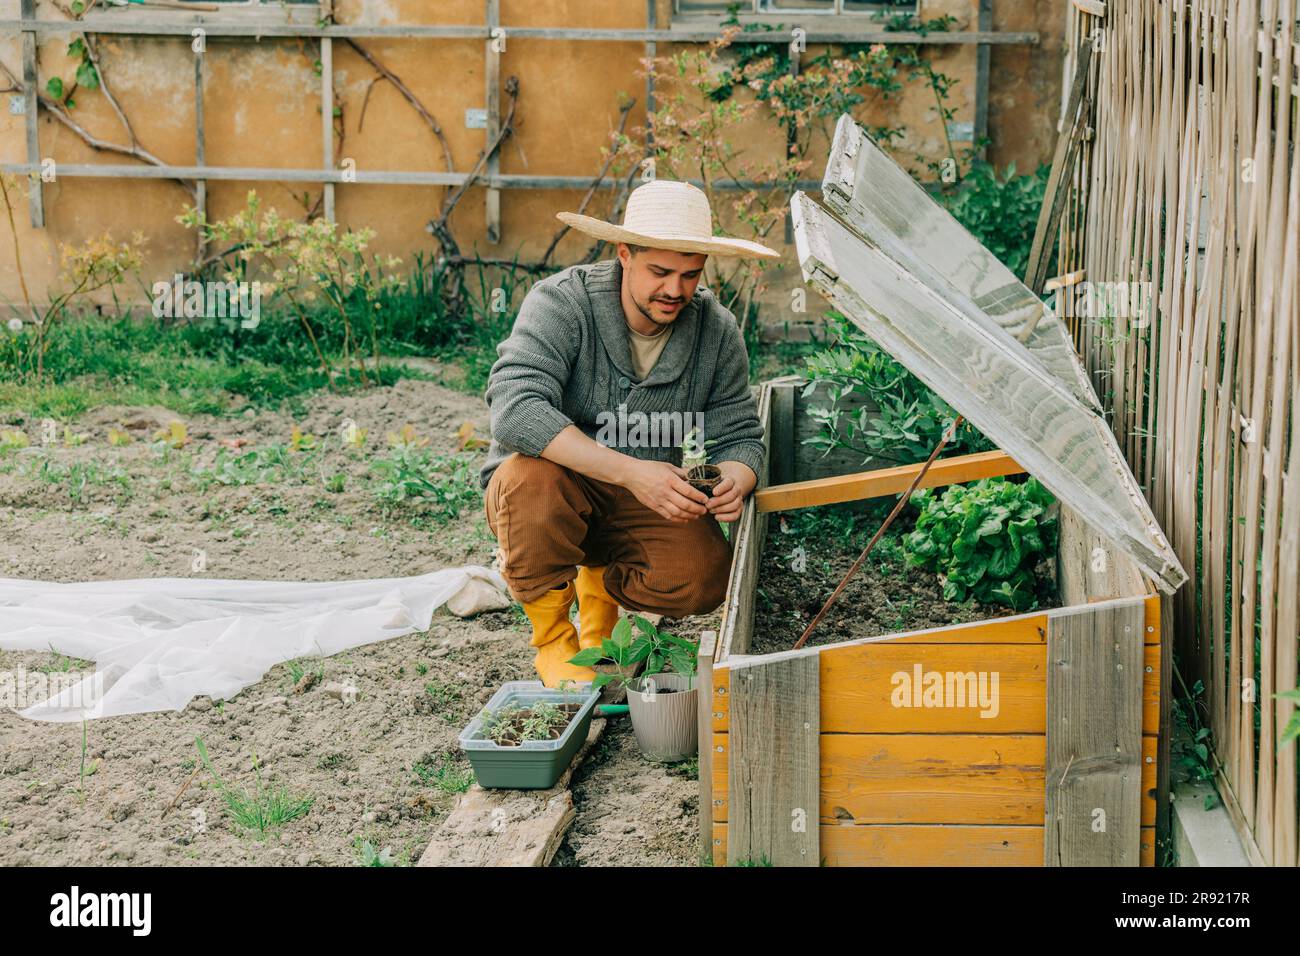 Man planting vegetable seedling in cold frame at garden Stock Photo